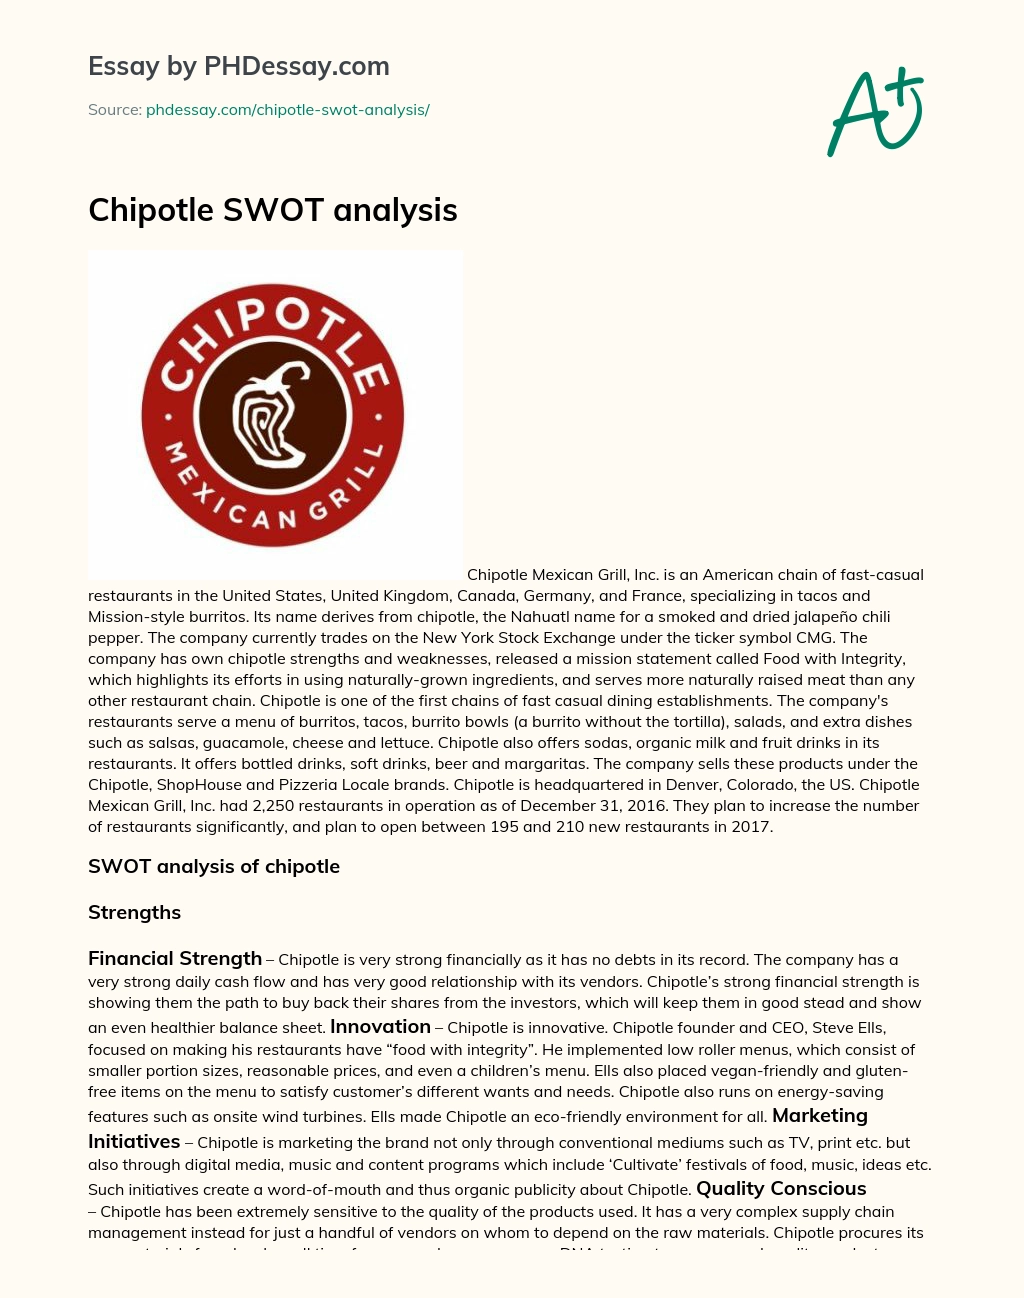 Chipotle SWOT analysis essay